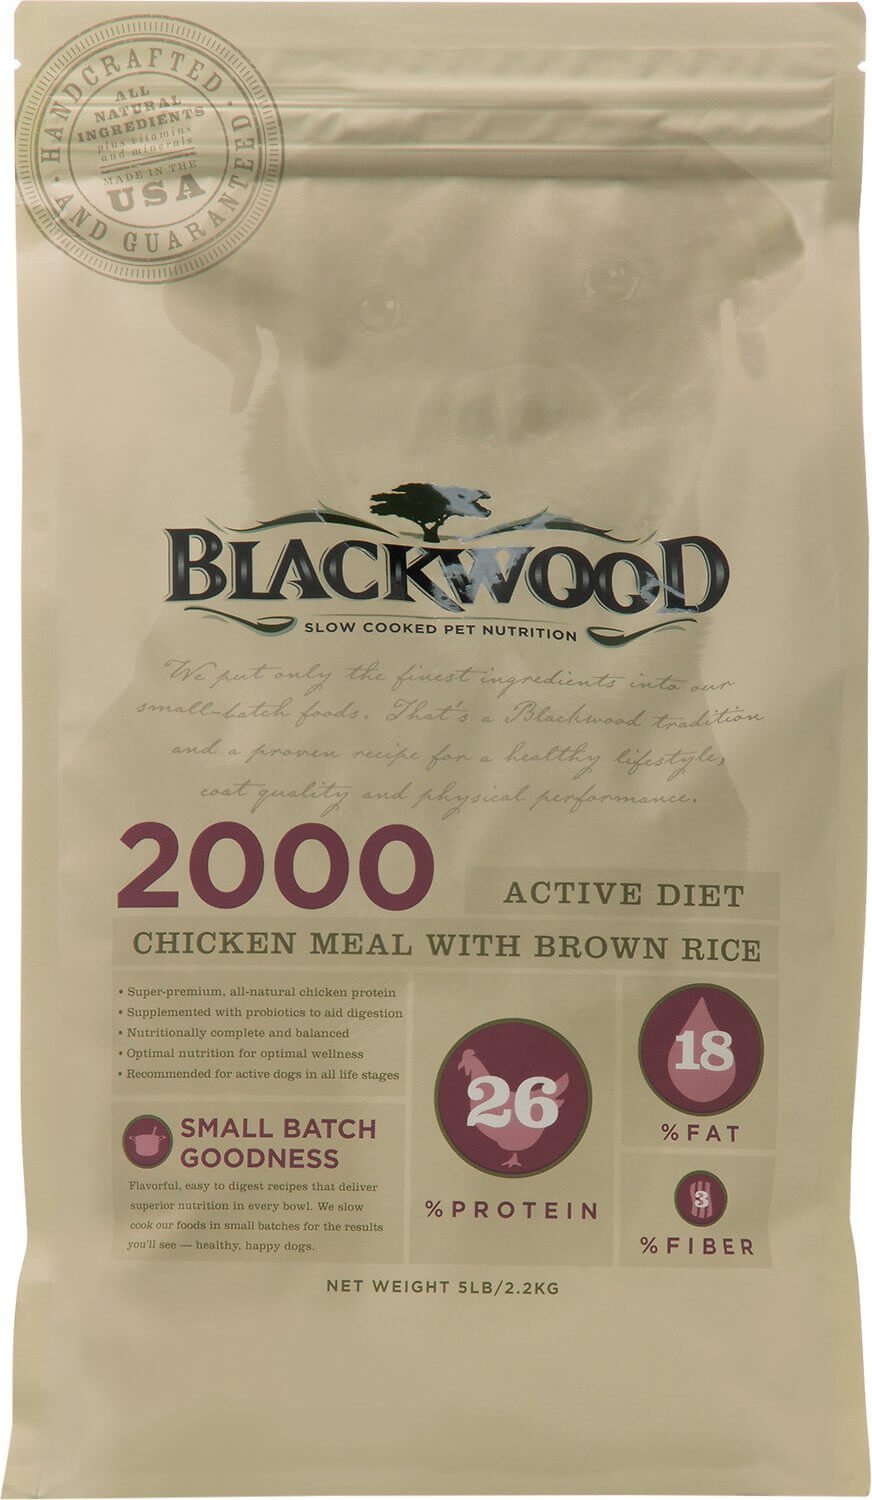 Blackwood Original Recipe Dog Food, Review, Rating